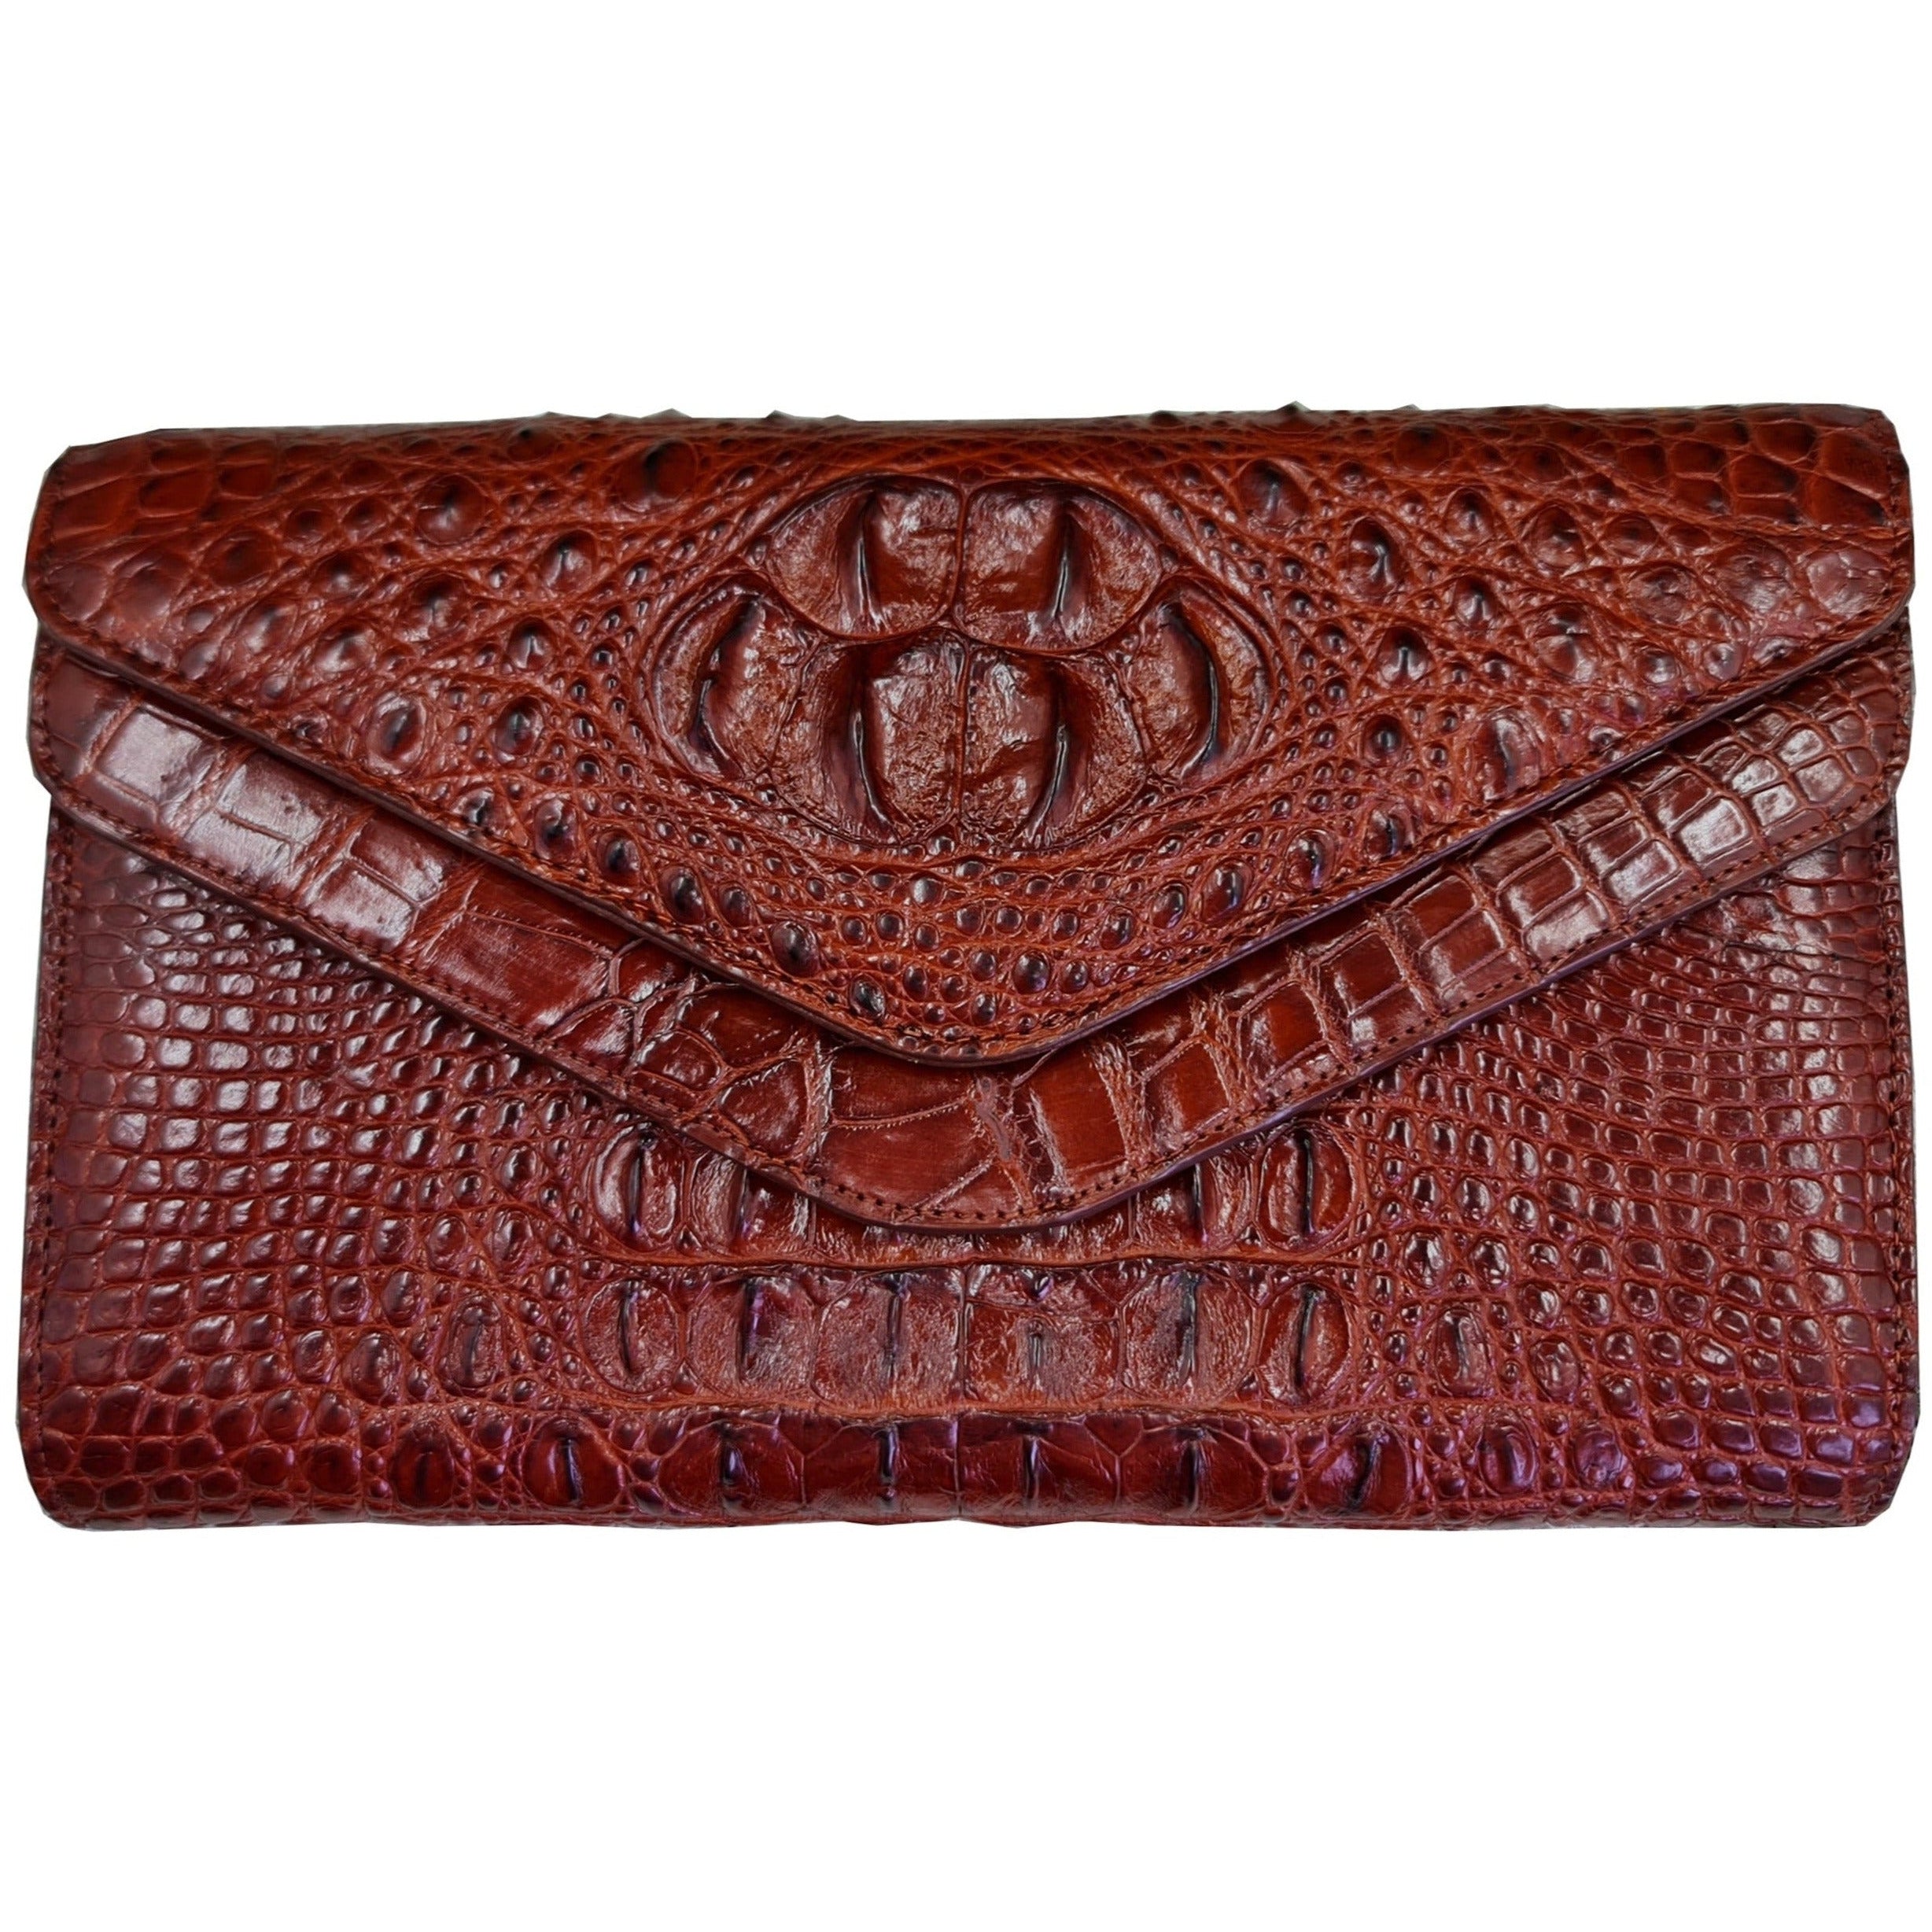 Crocodile Leather Portfolio Bag at Rs 3800/piece | चमड़े का पोरगफोलियो वाला  बैग in Mumbai | ID: 2573907373